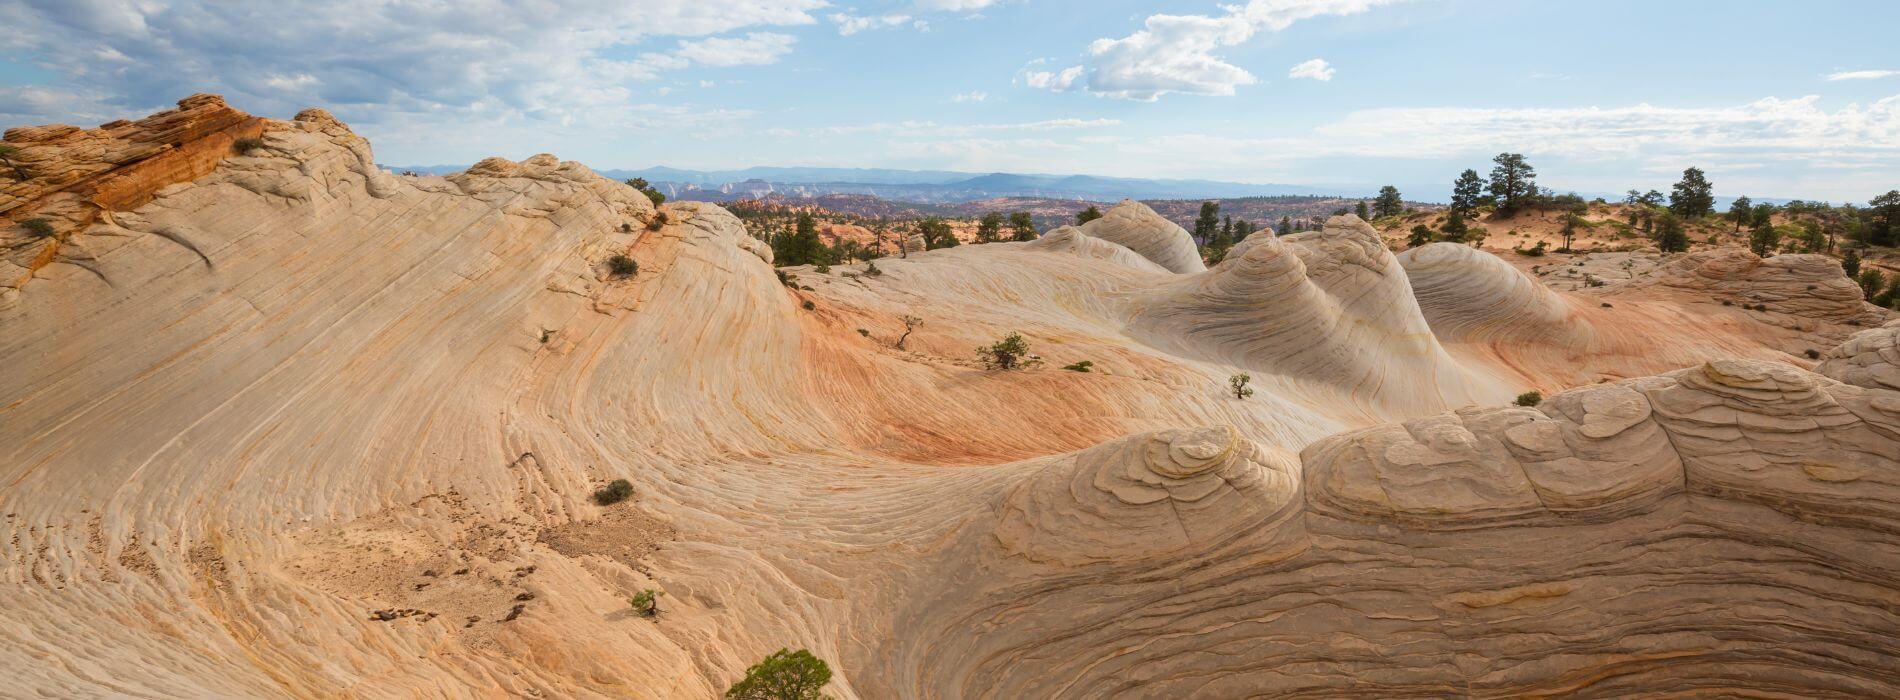 Utah Swirling Sandstone